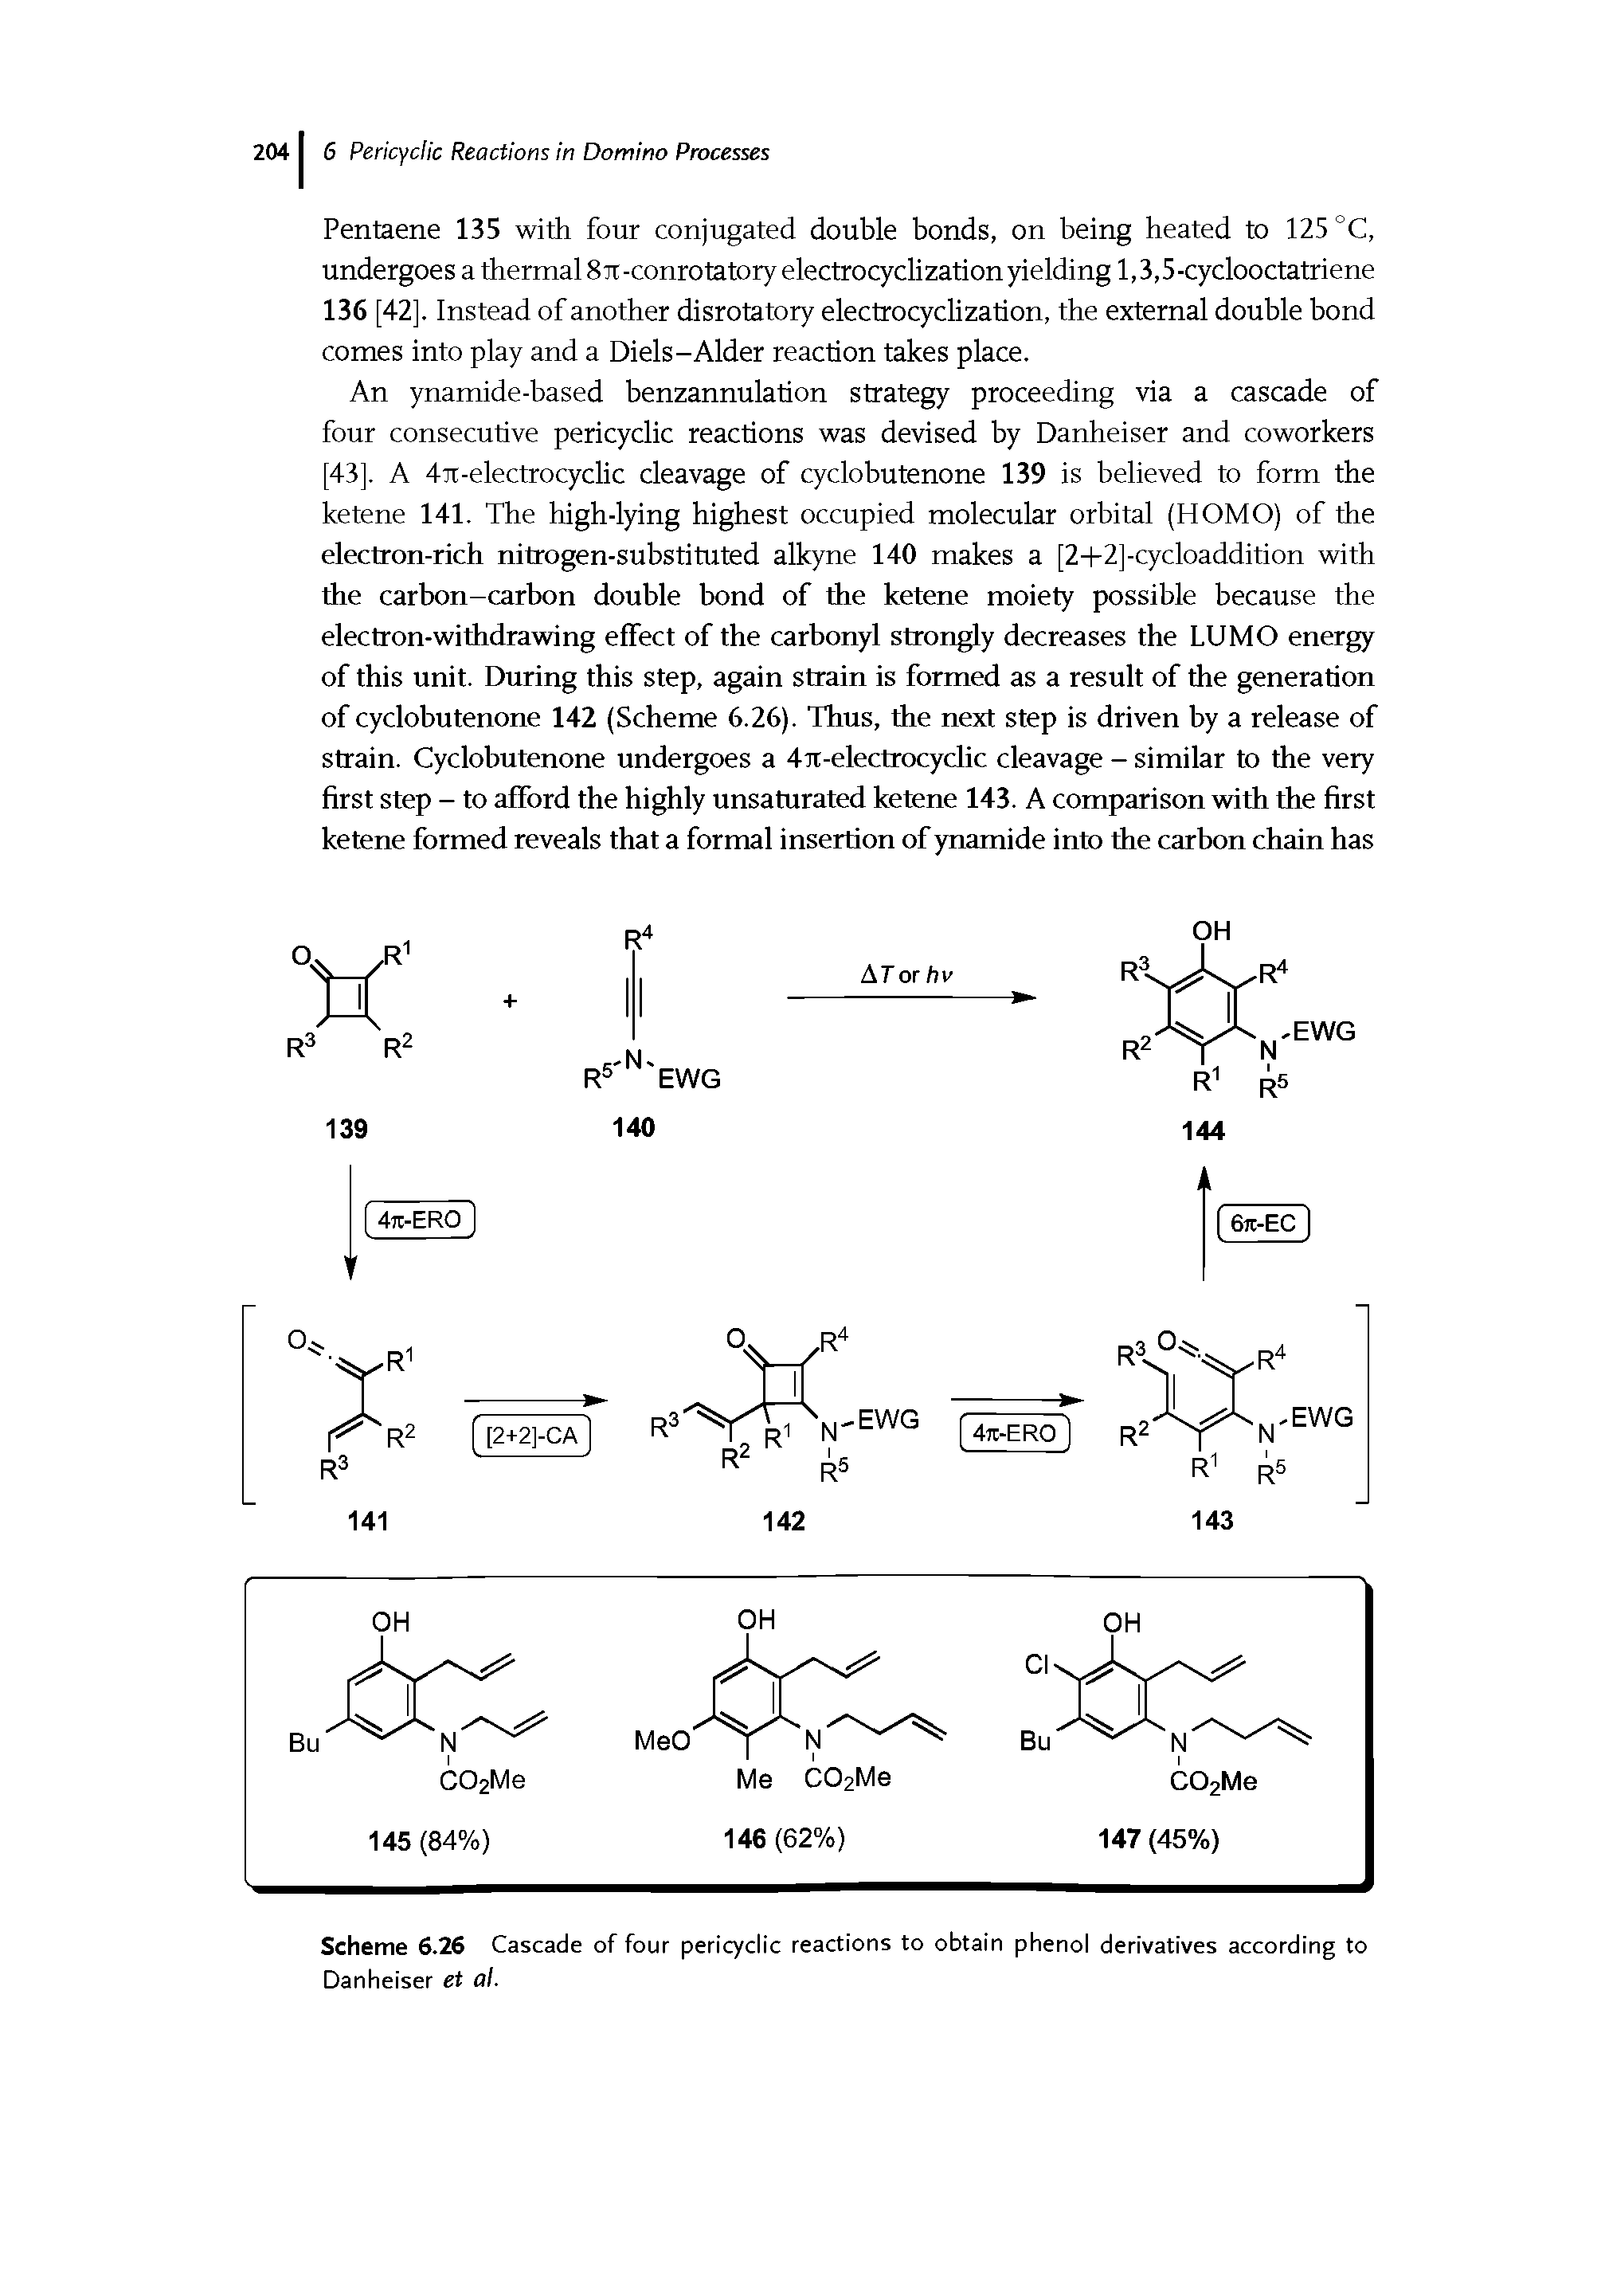 Scheme 6.26 Cascade of four pericyclic reactions to obtain phenol derivatives according to Danheiser et al.